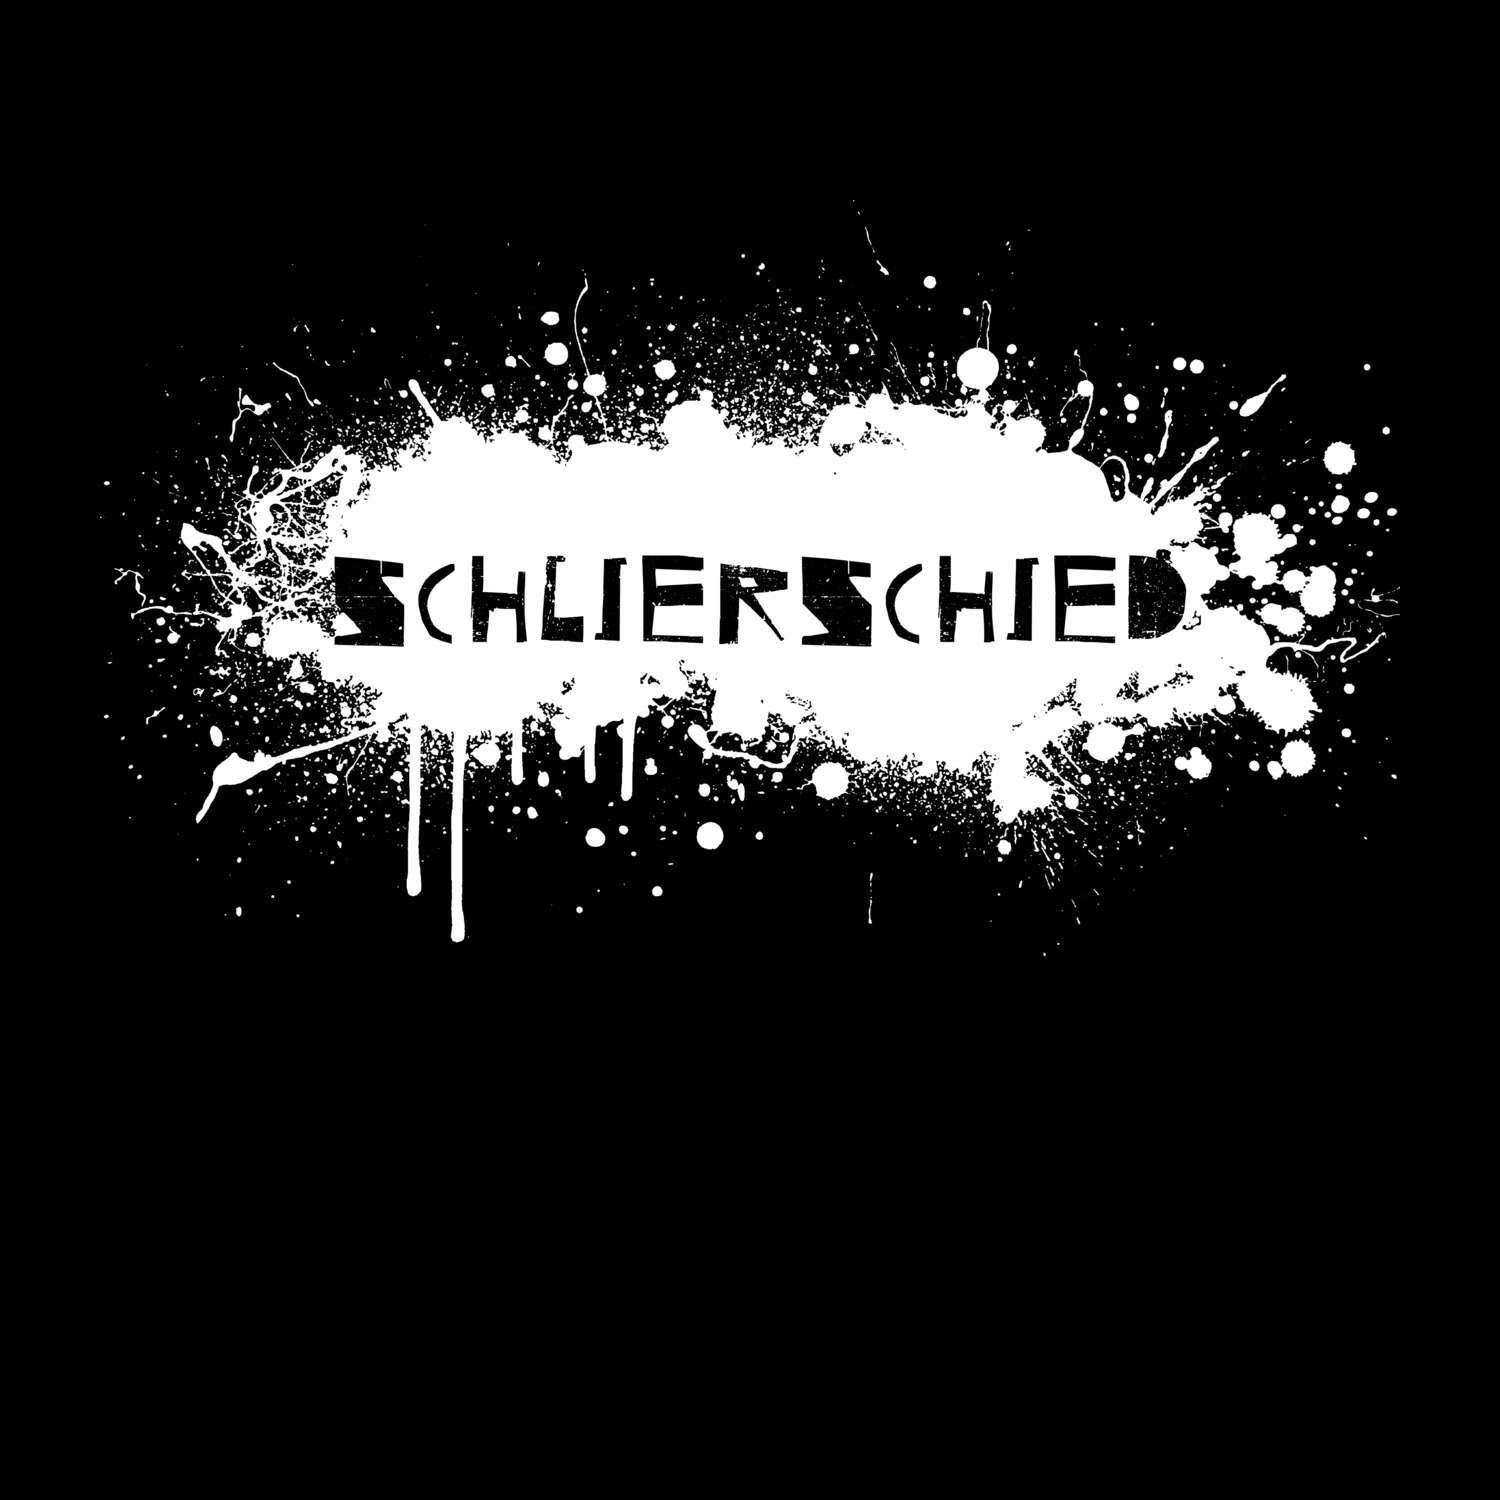 Schlierschied T-Shirt »Paint Splash Punk«